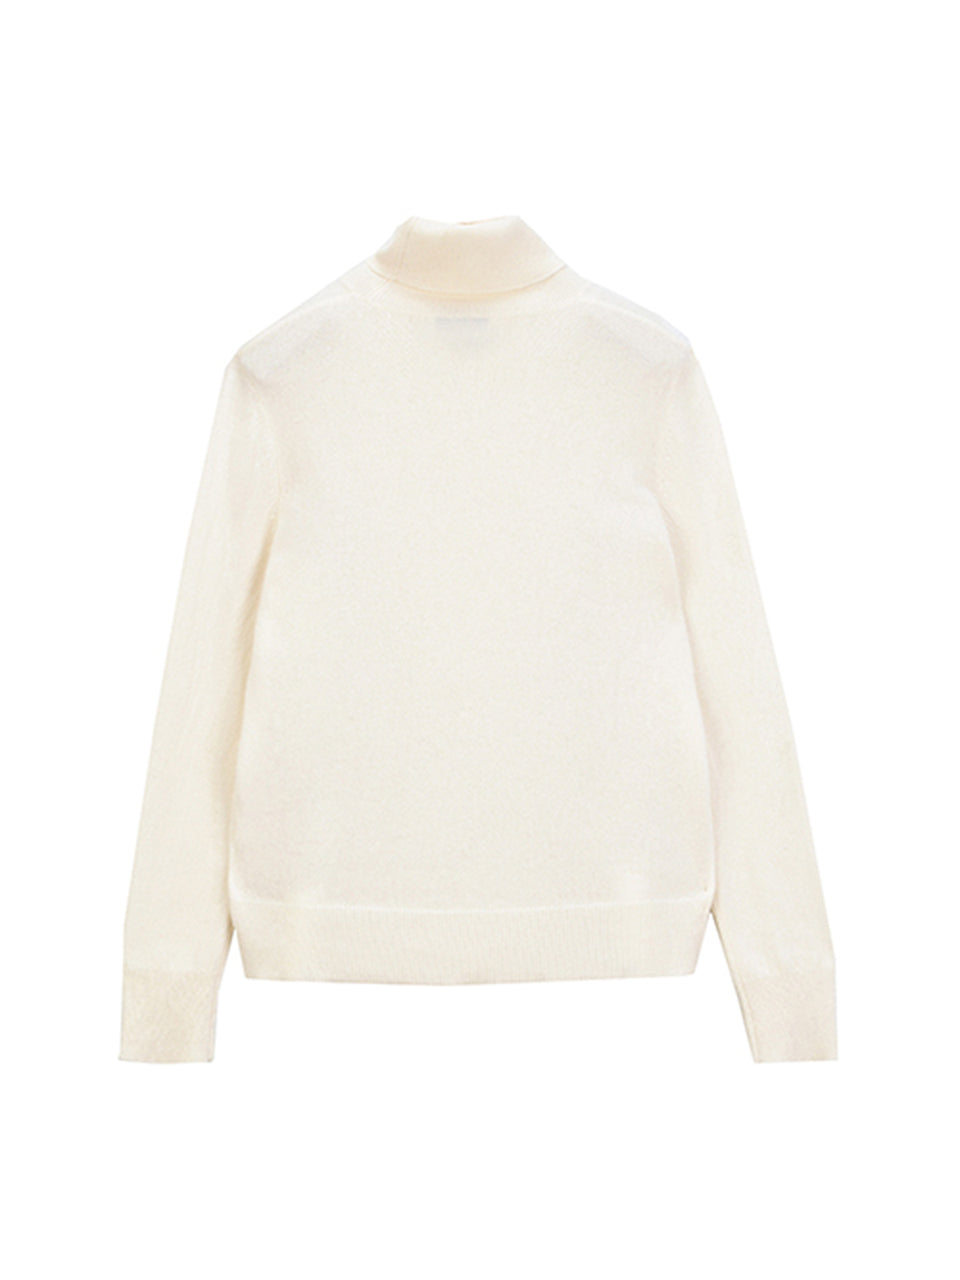 Turtleneck Sweater_Vintage White